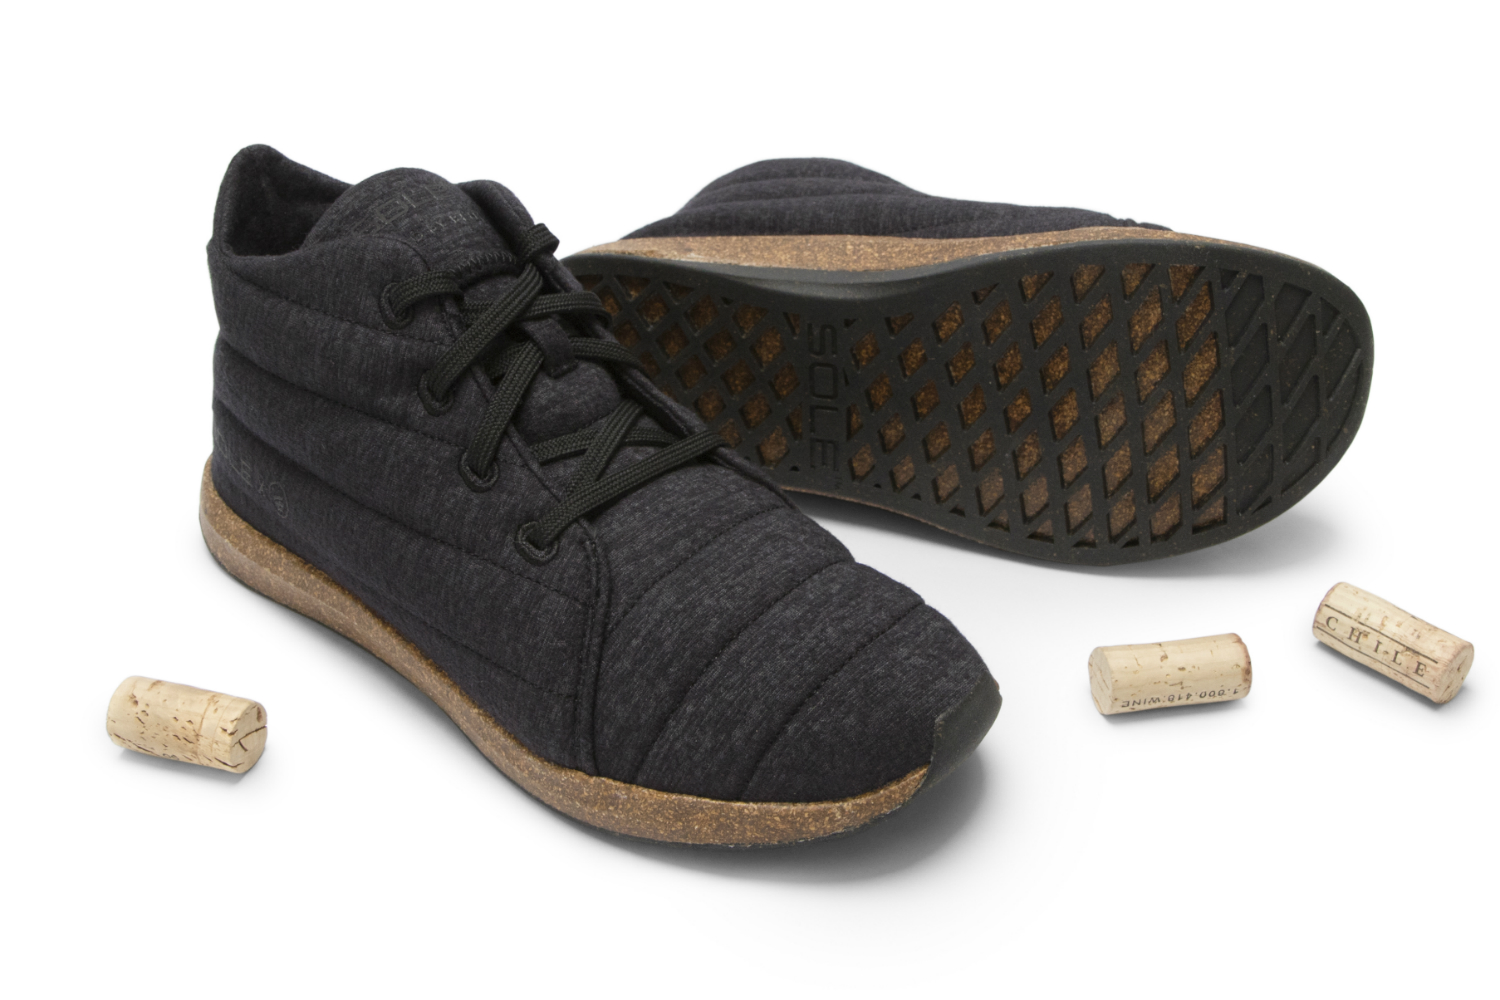 An Honest Review of Sole X UBB's Jasper Chukka, an Eco-Friendly Shoe ...